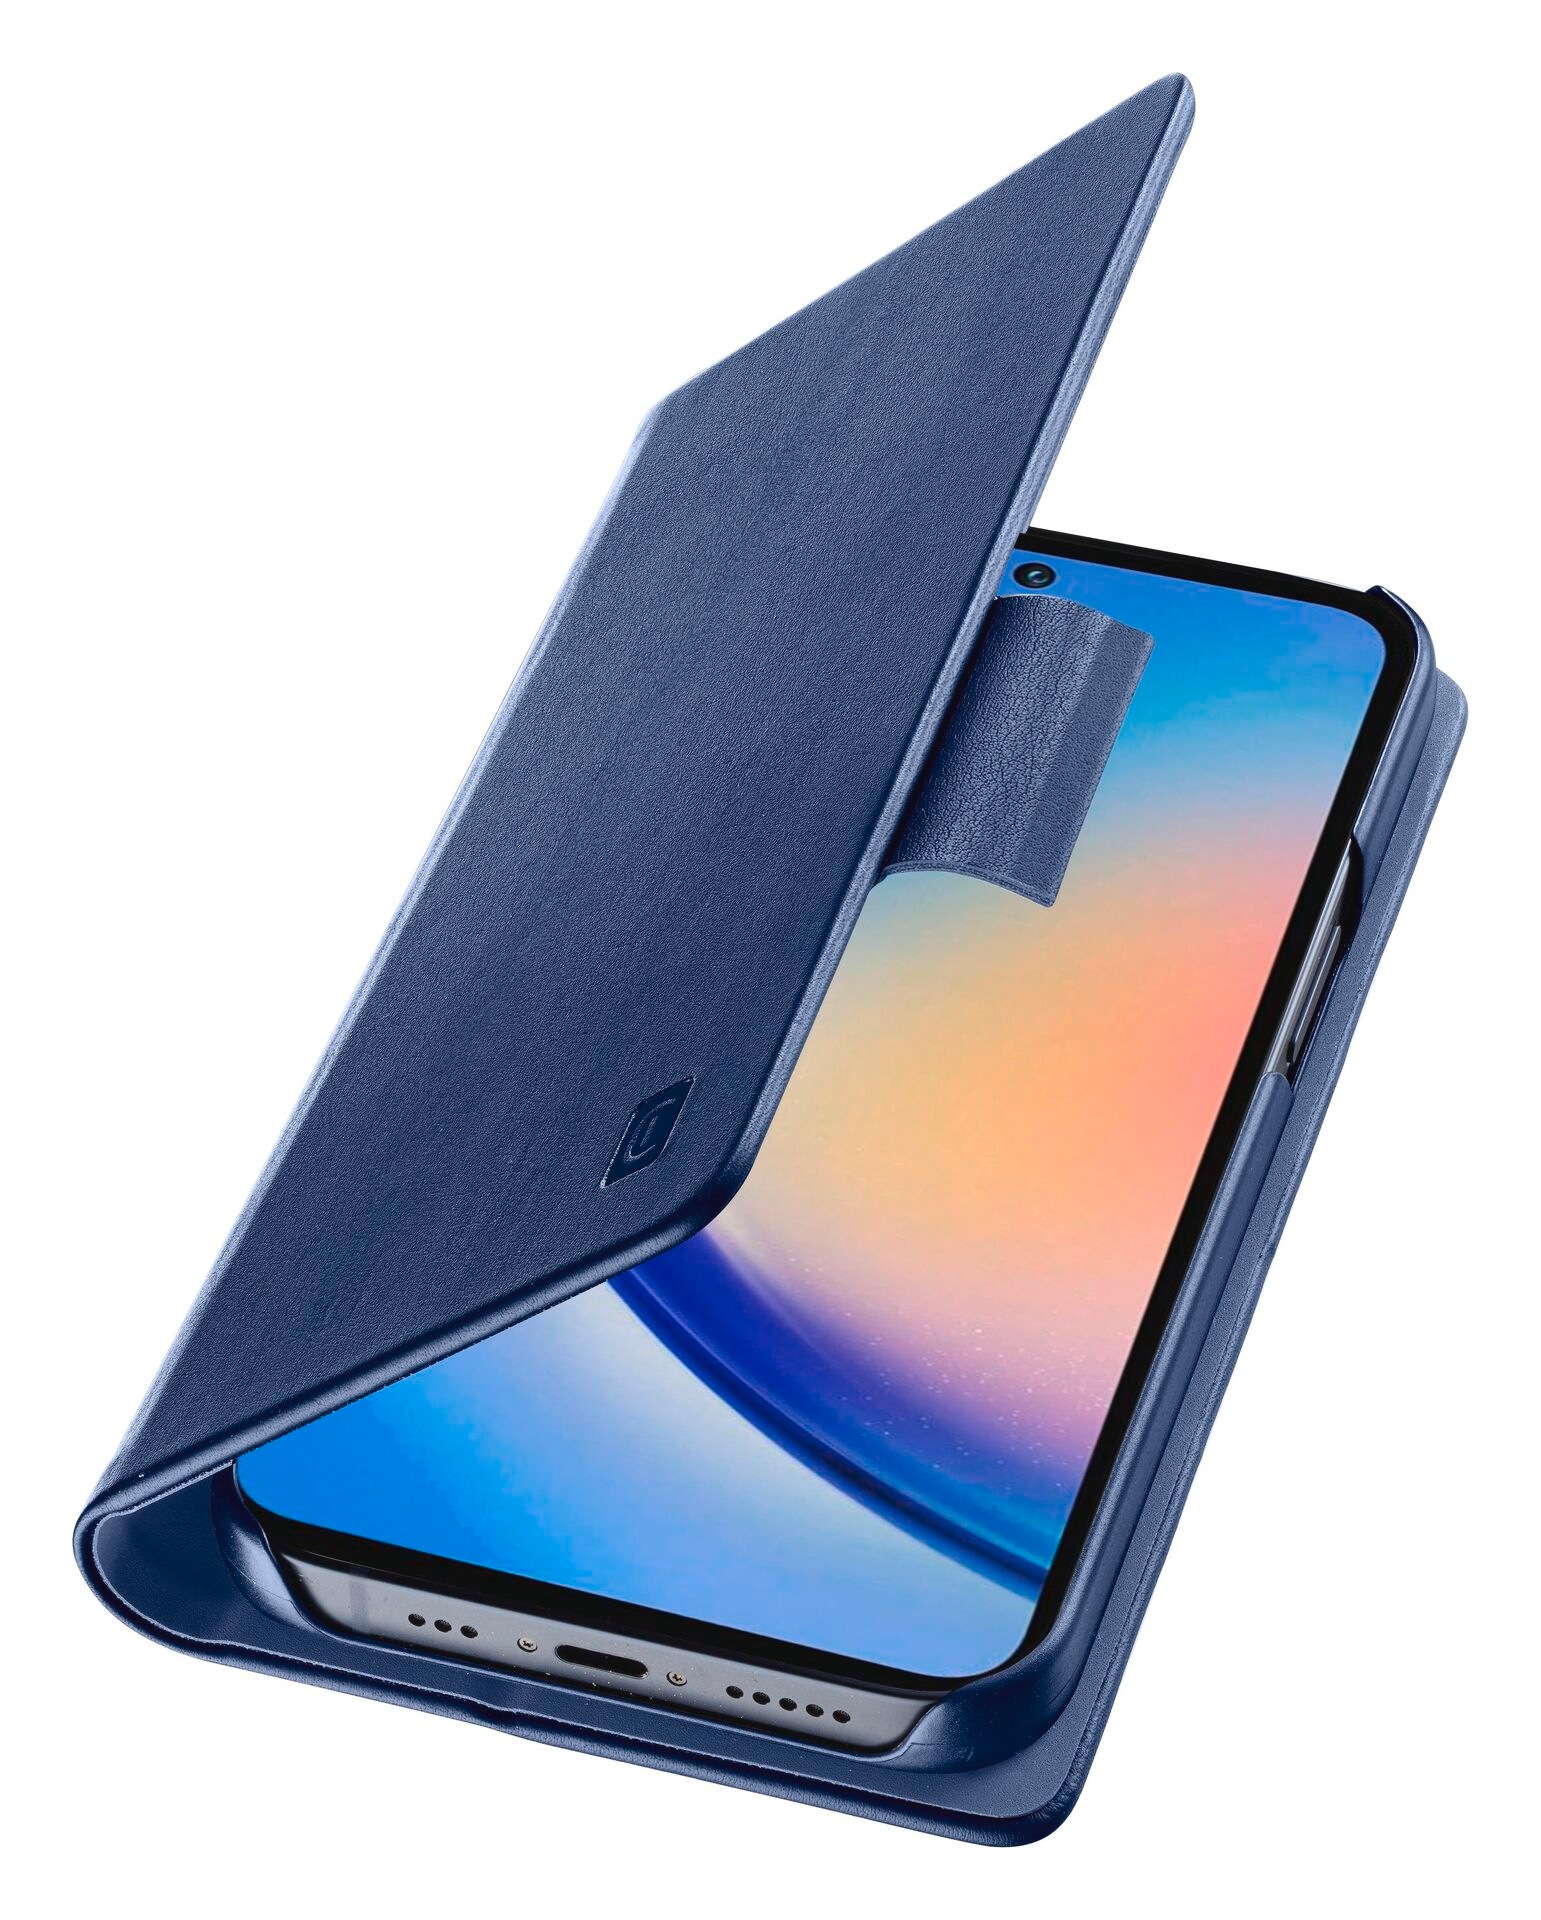 Cellularline Handyhülle »Book Case für Samsung Galaxy A35 5G«, Backcover, Schutzhülle, Handyschutzhülle, Case, Schutzcase, stoßfest